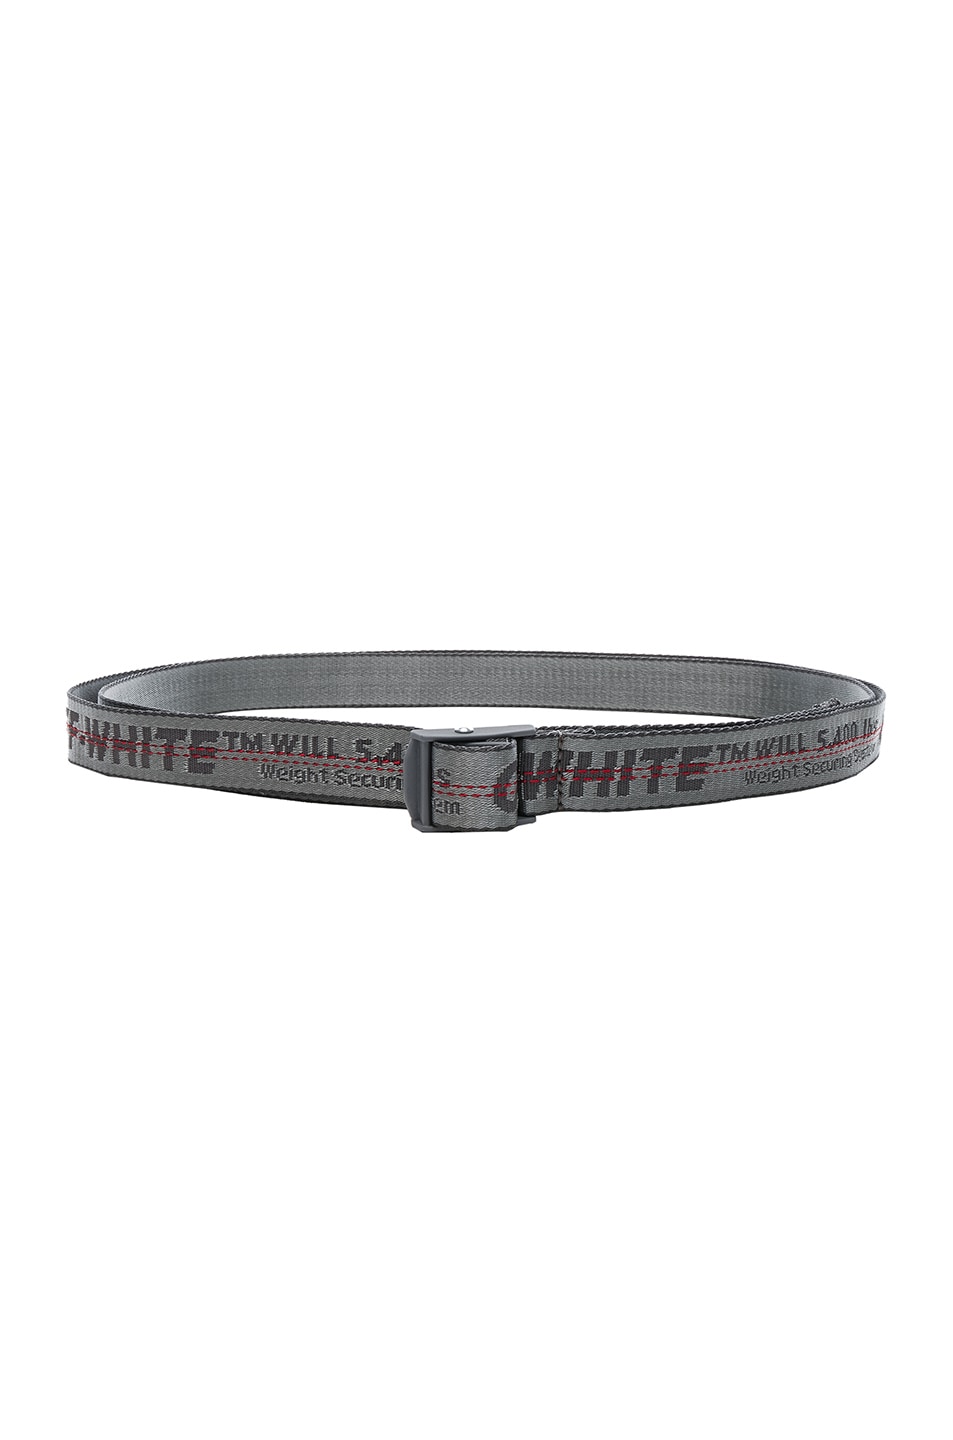 OFF-WHITE Mini Industrial Belt in Medium Grey & Light Grey | FWRD